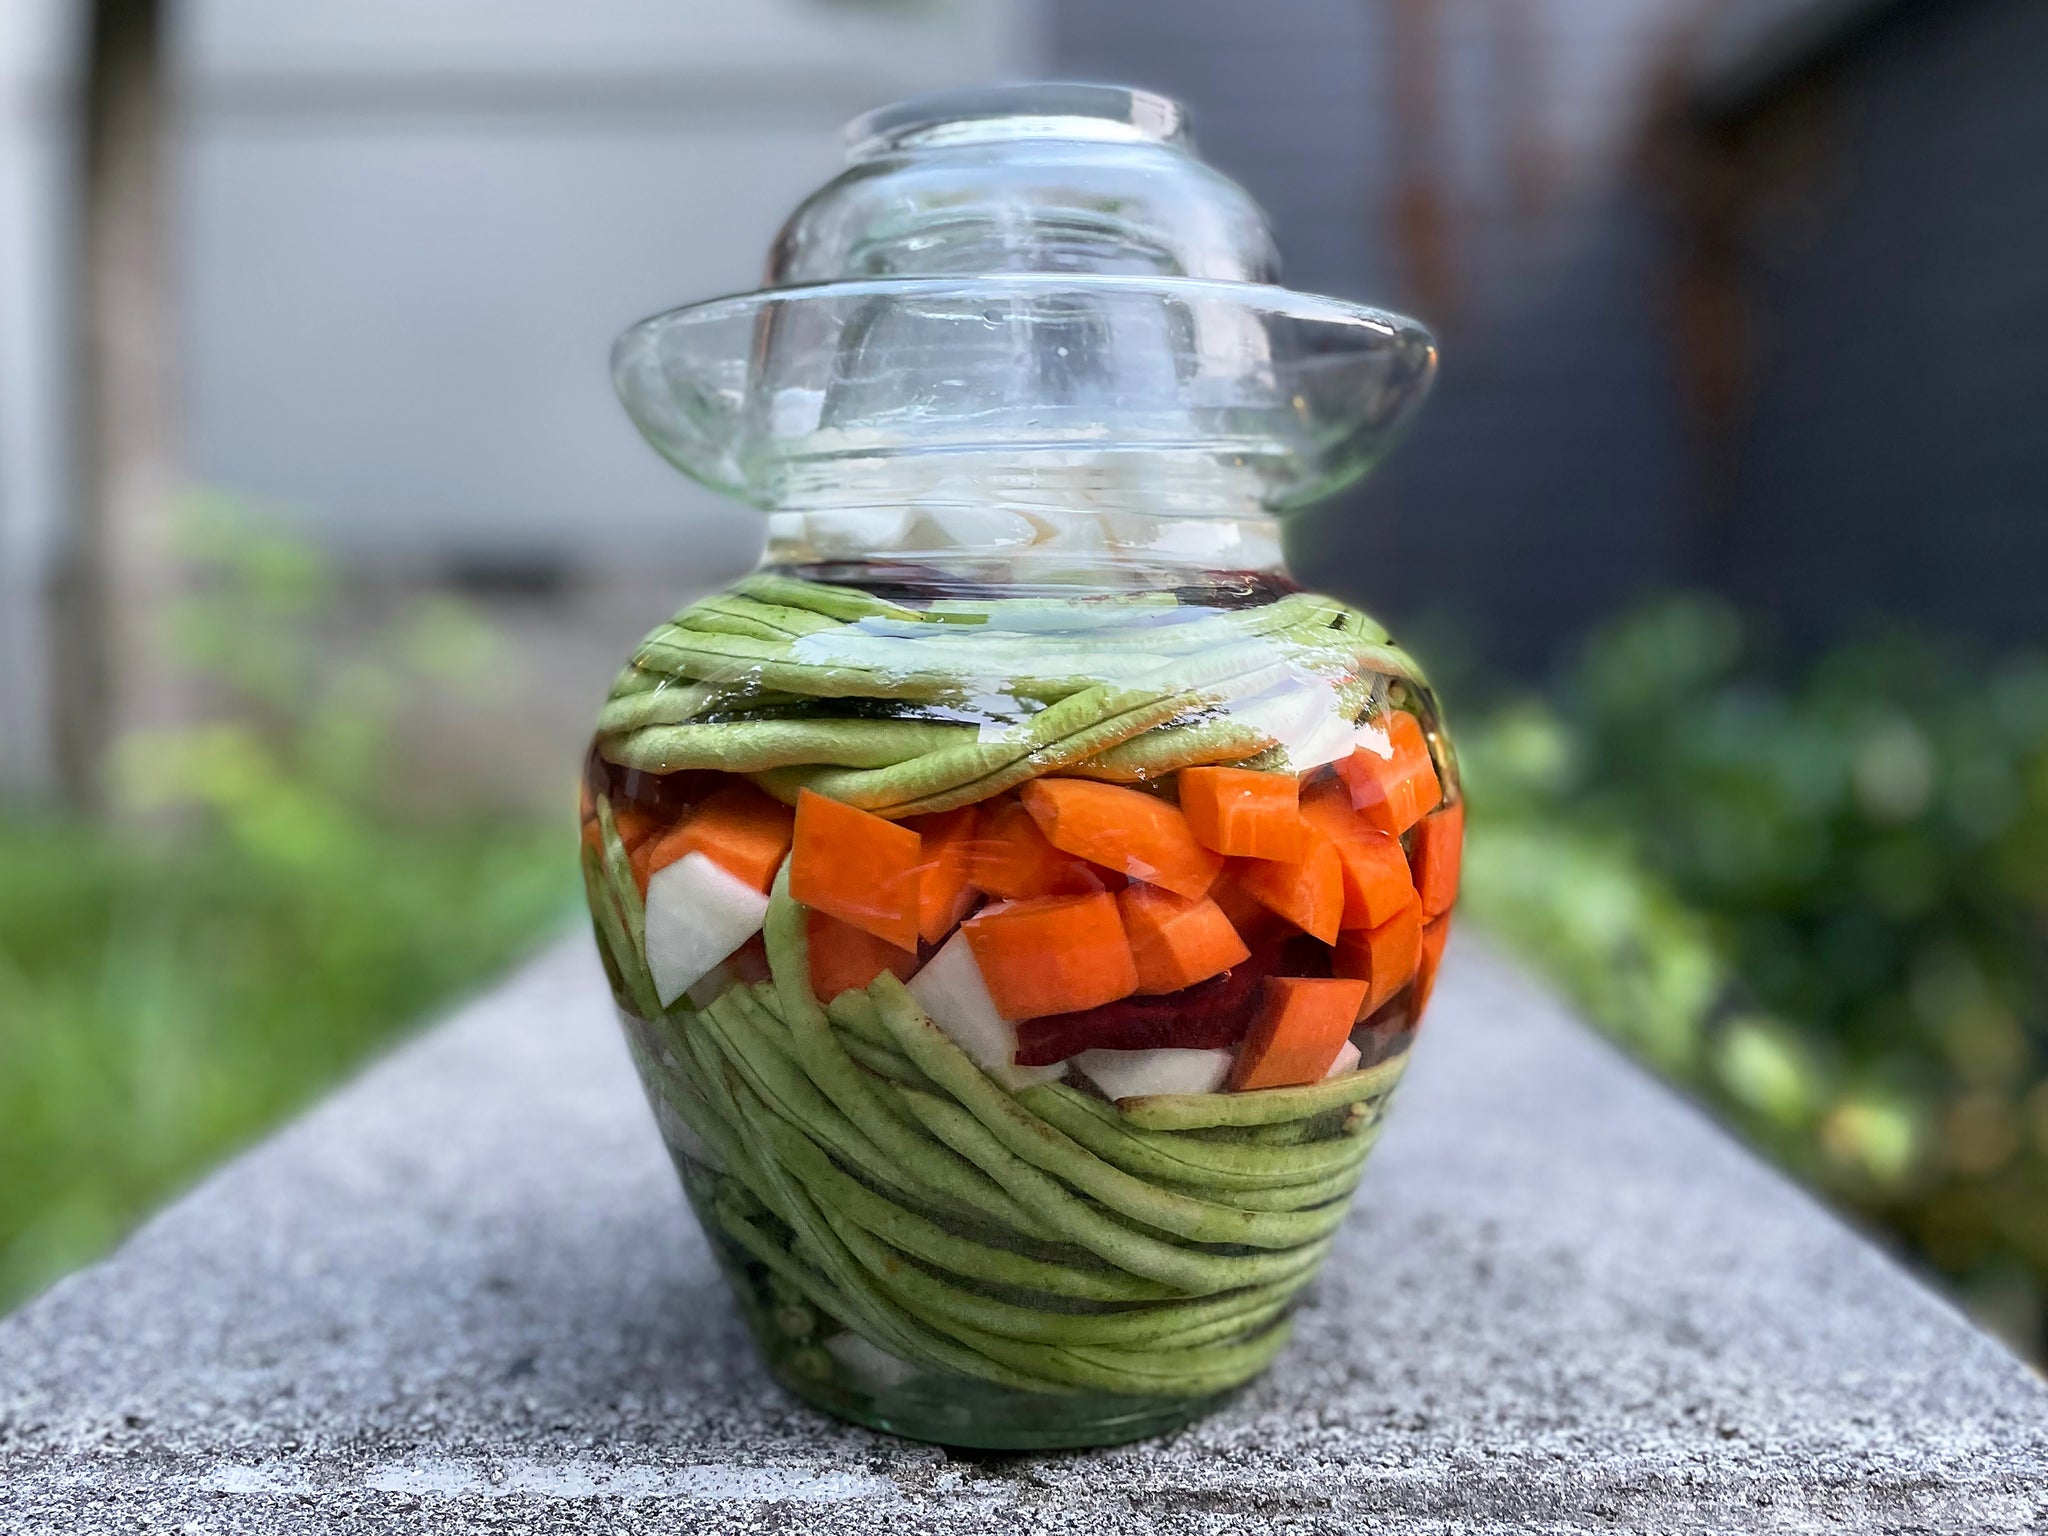 Sichuan Paocai Pickle Jar  With Long Beans, Carrot and Daikon